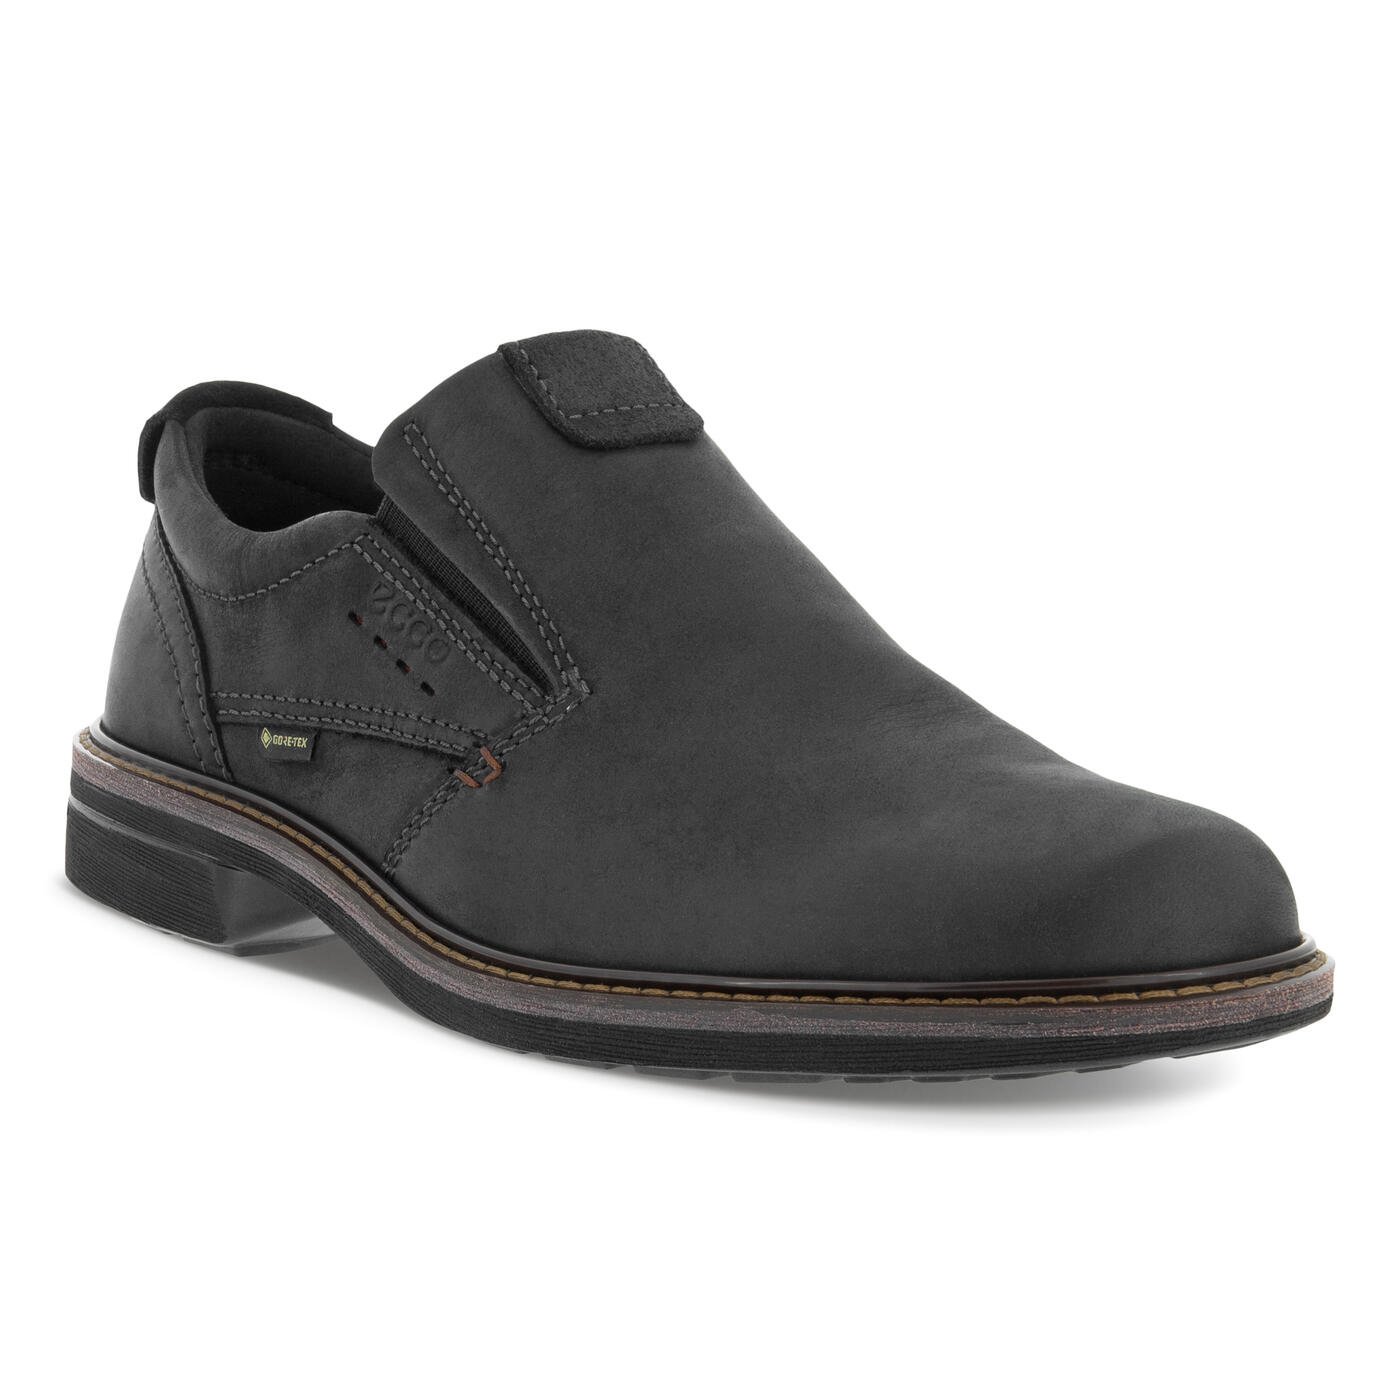 Turn Men's Slip On Shoes | Men's Casual Shoes | ECCO® Shoes